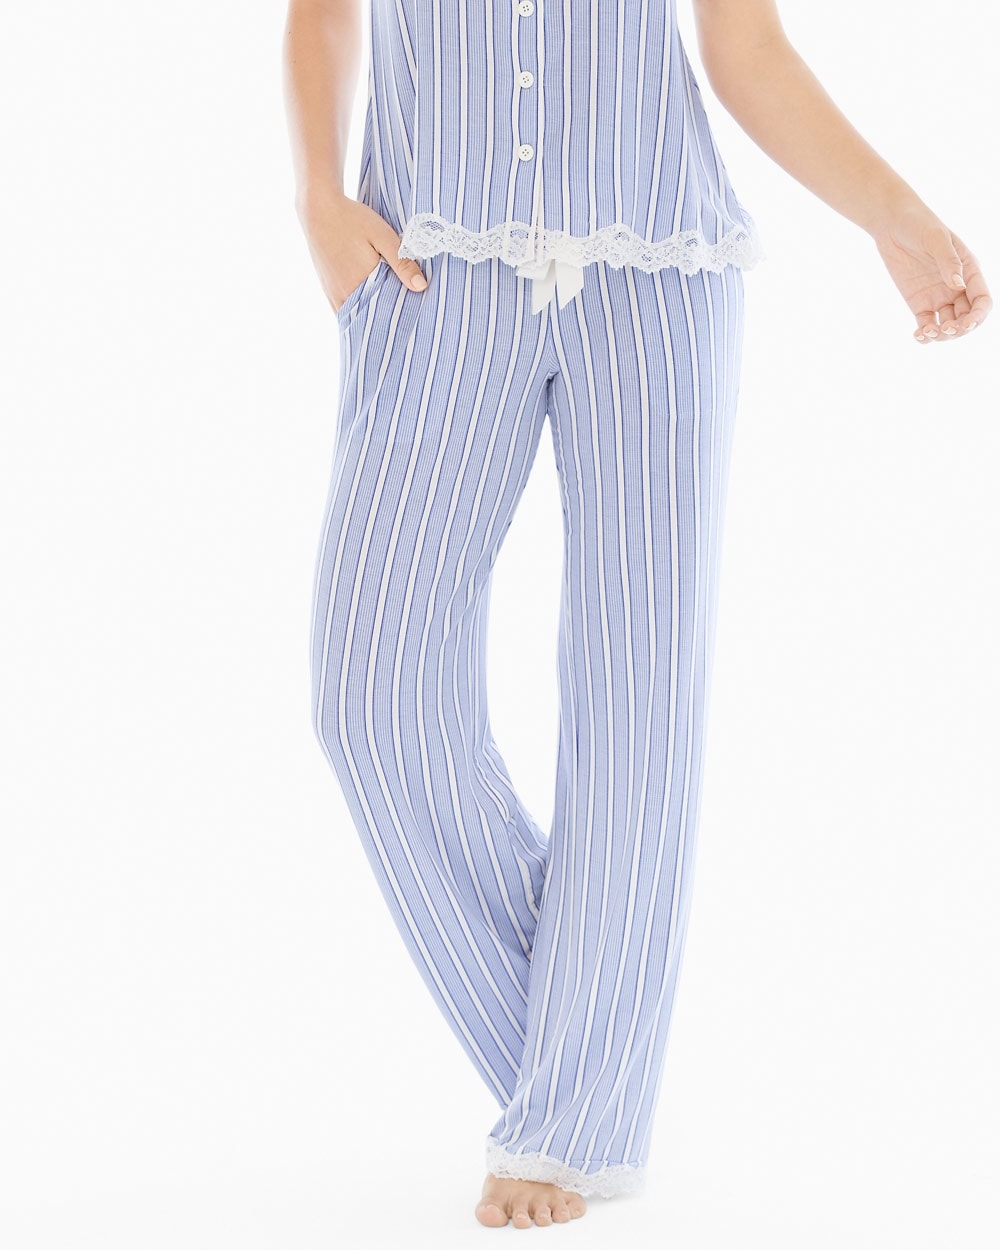 Cool Nights Tall Inseam Pajama Pants Cottage Stripe Larkspur